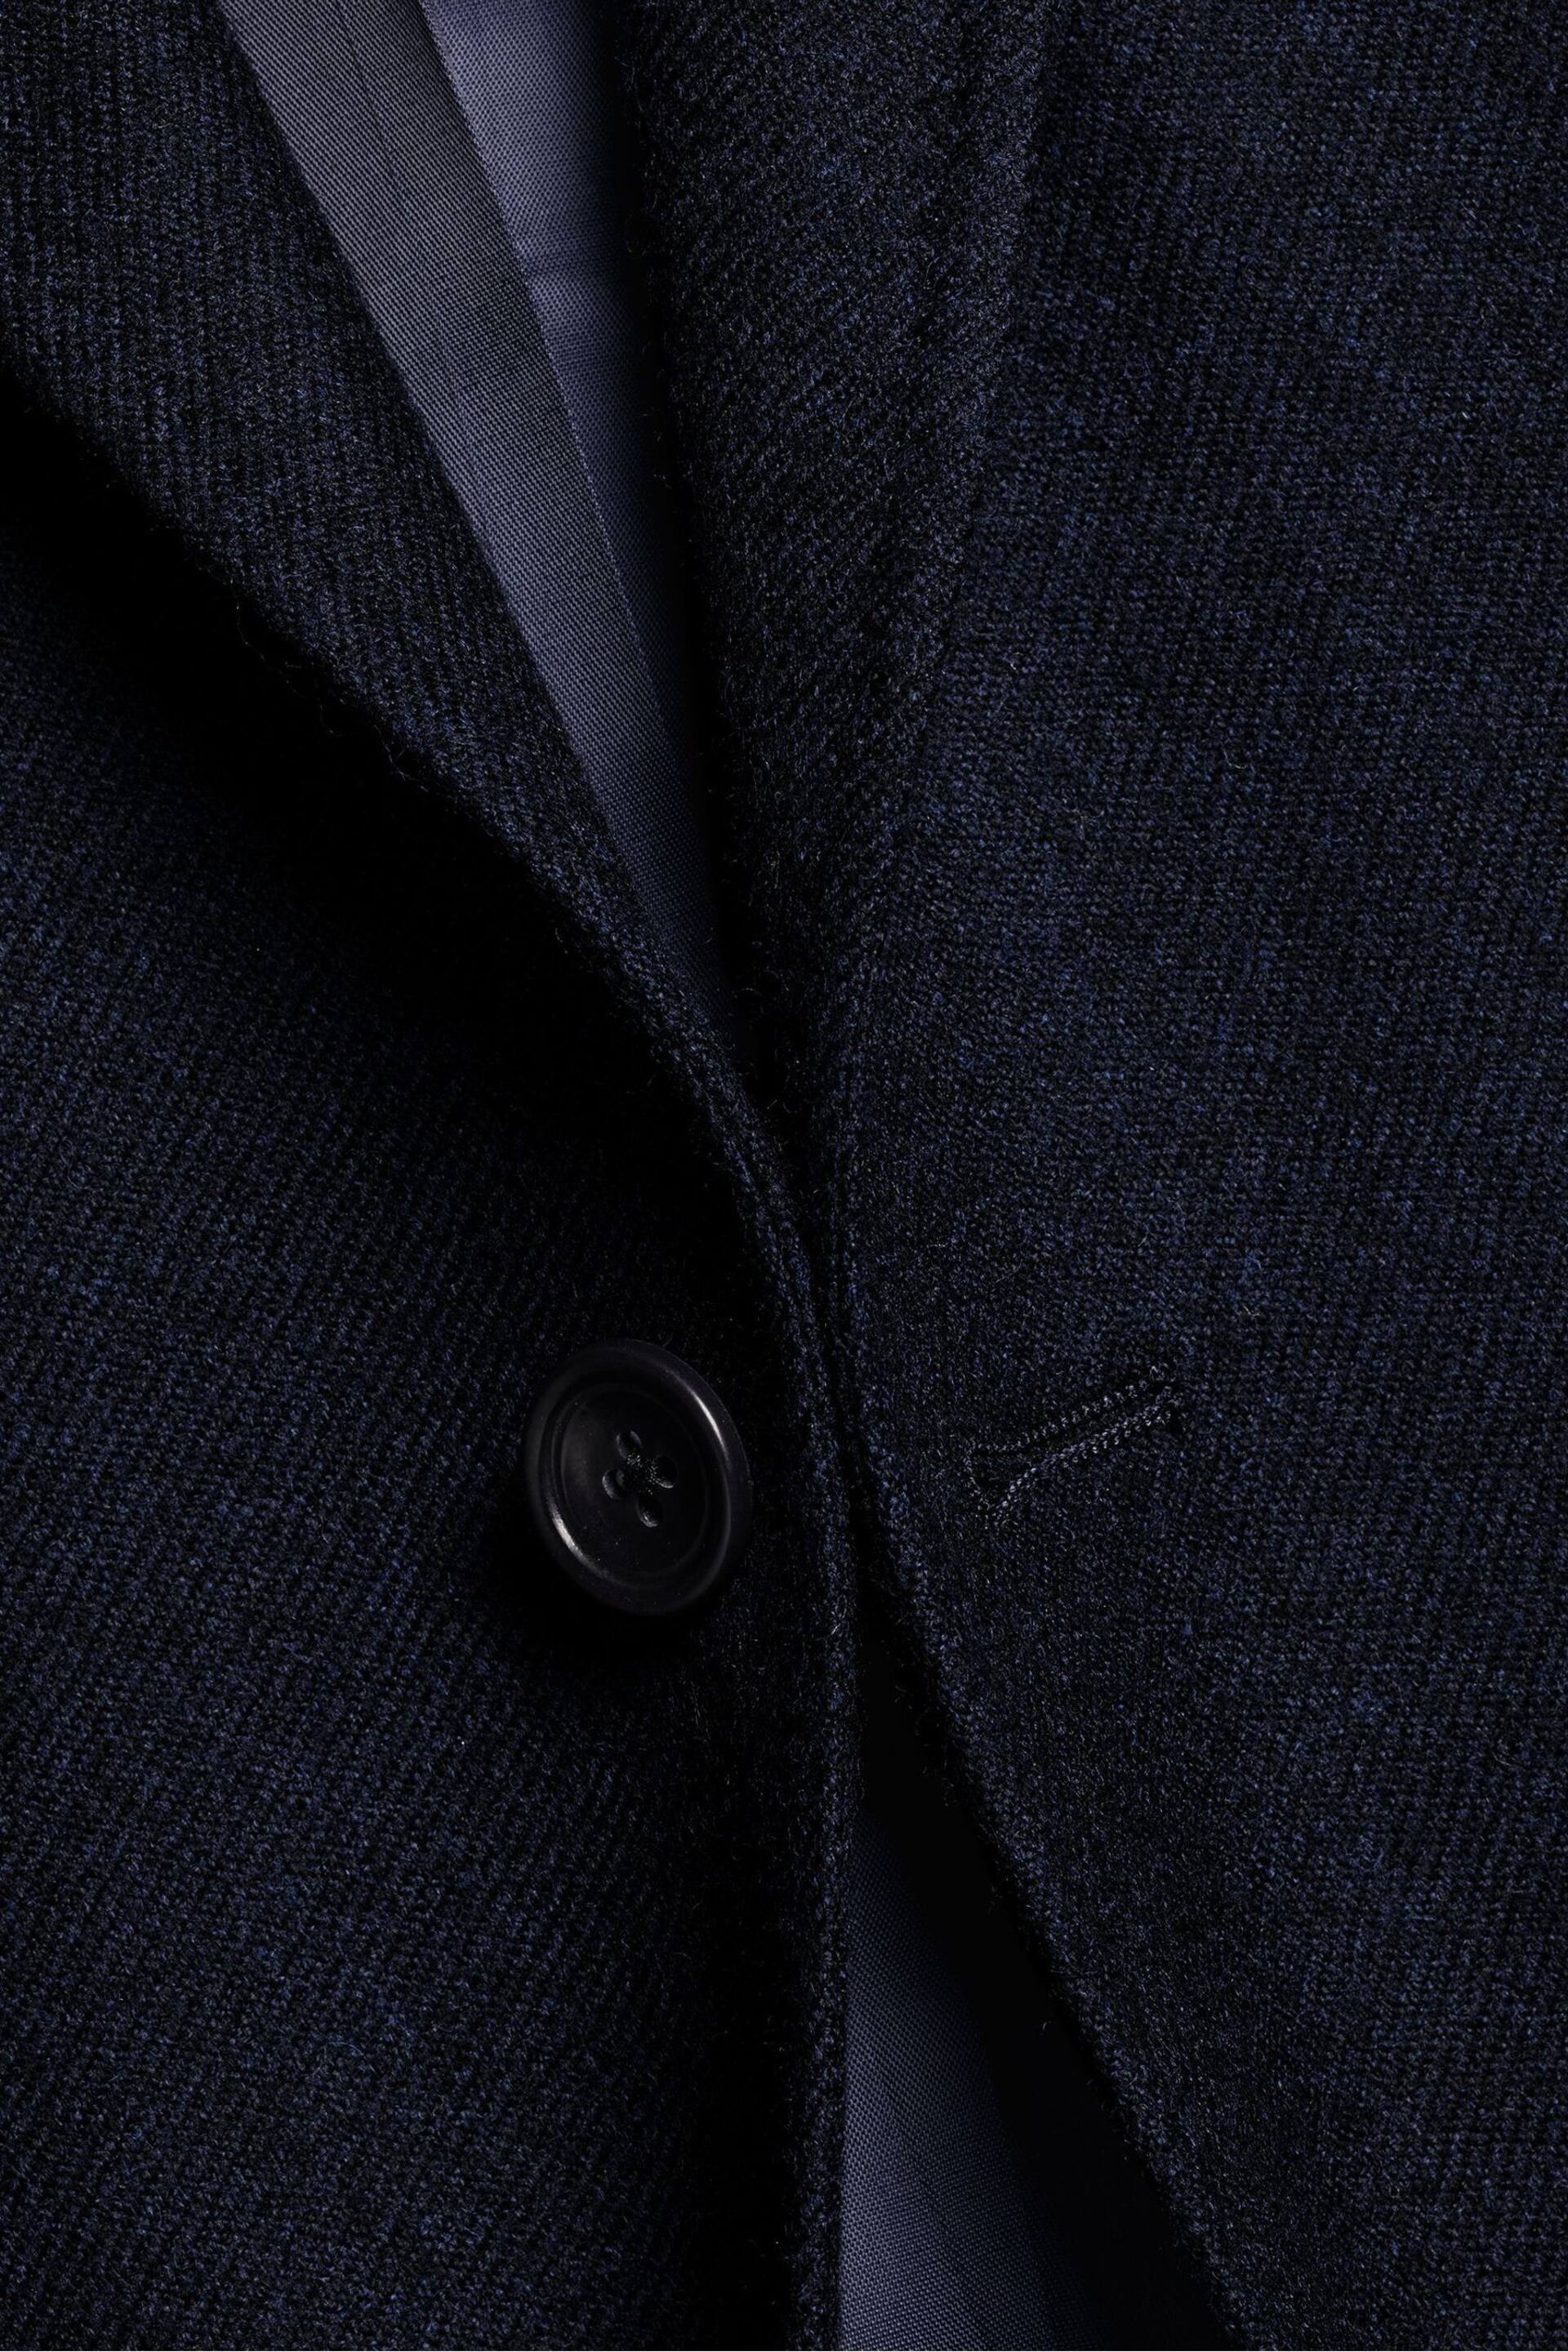 Charles Tyrwhitt Blue Slim Fit Twill Wool Jacket - Image 5 of 5